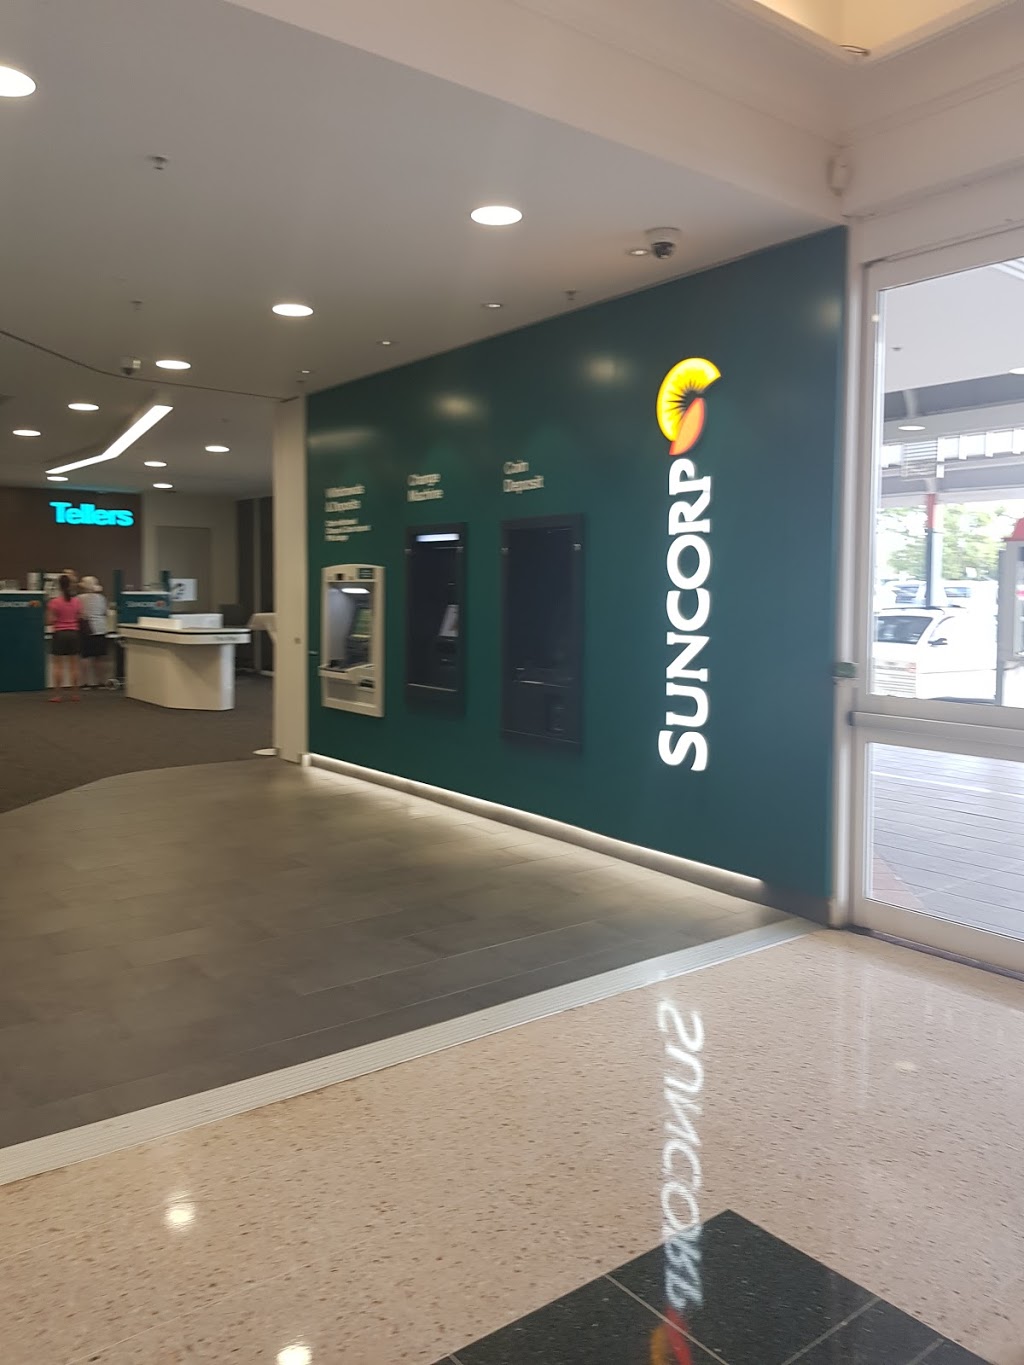 Suncorp Bank ATM | Capalaba Park Shopping Centre, Redland Bay Rd &, Mount Cotton Rd, Capalaba QLD 4157, Australia | Phone: 13 11 55